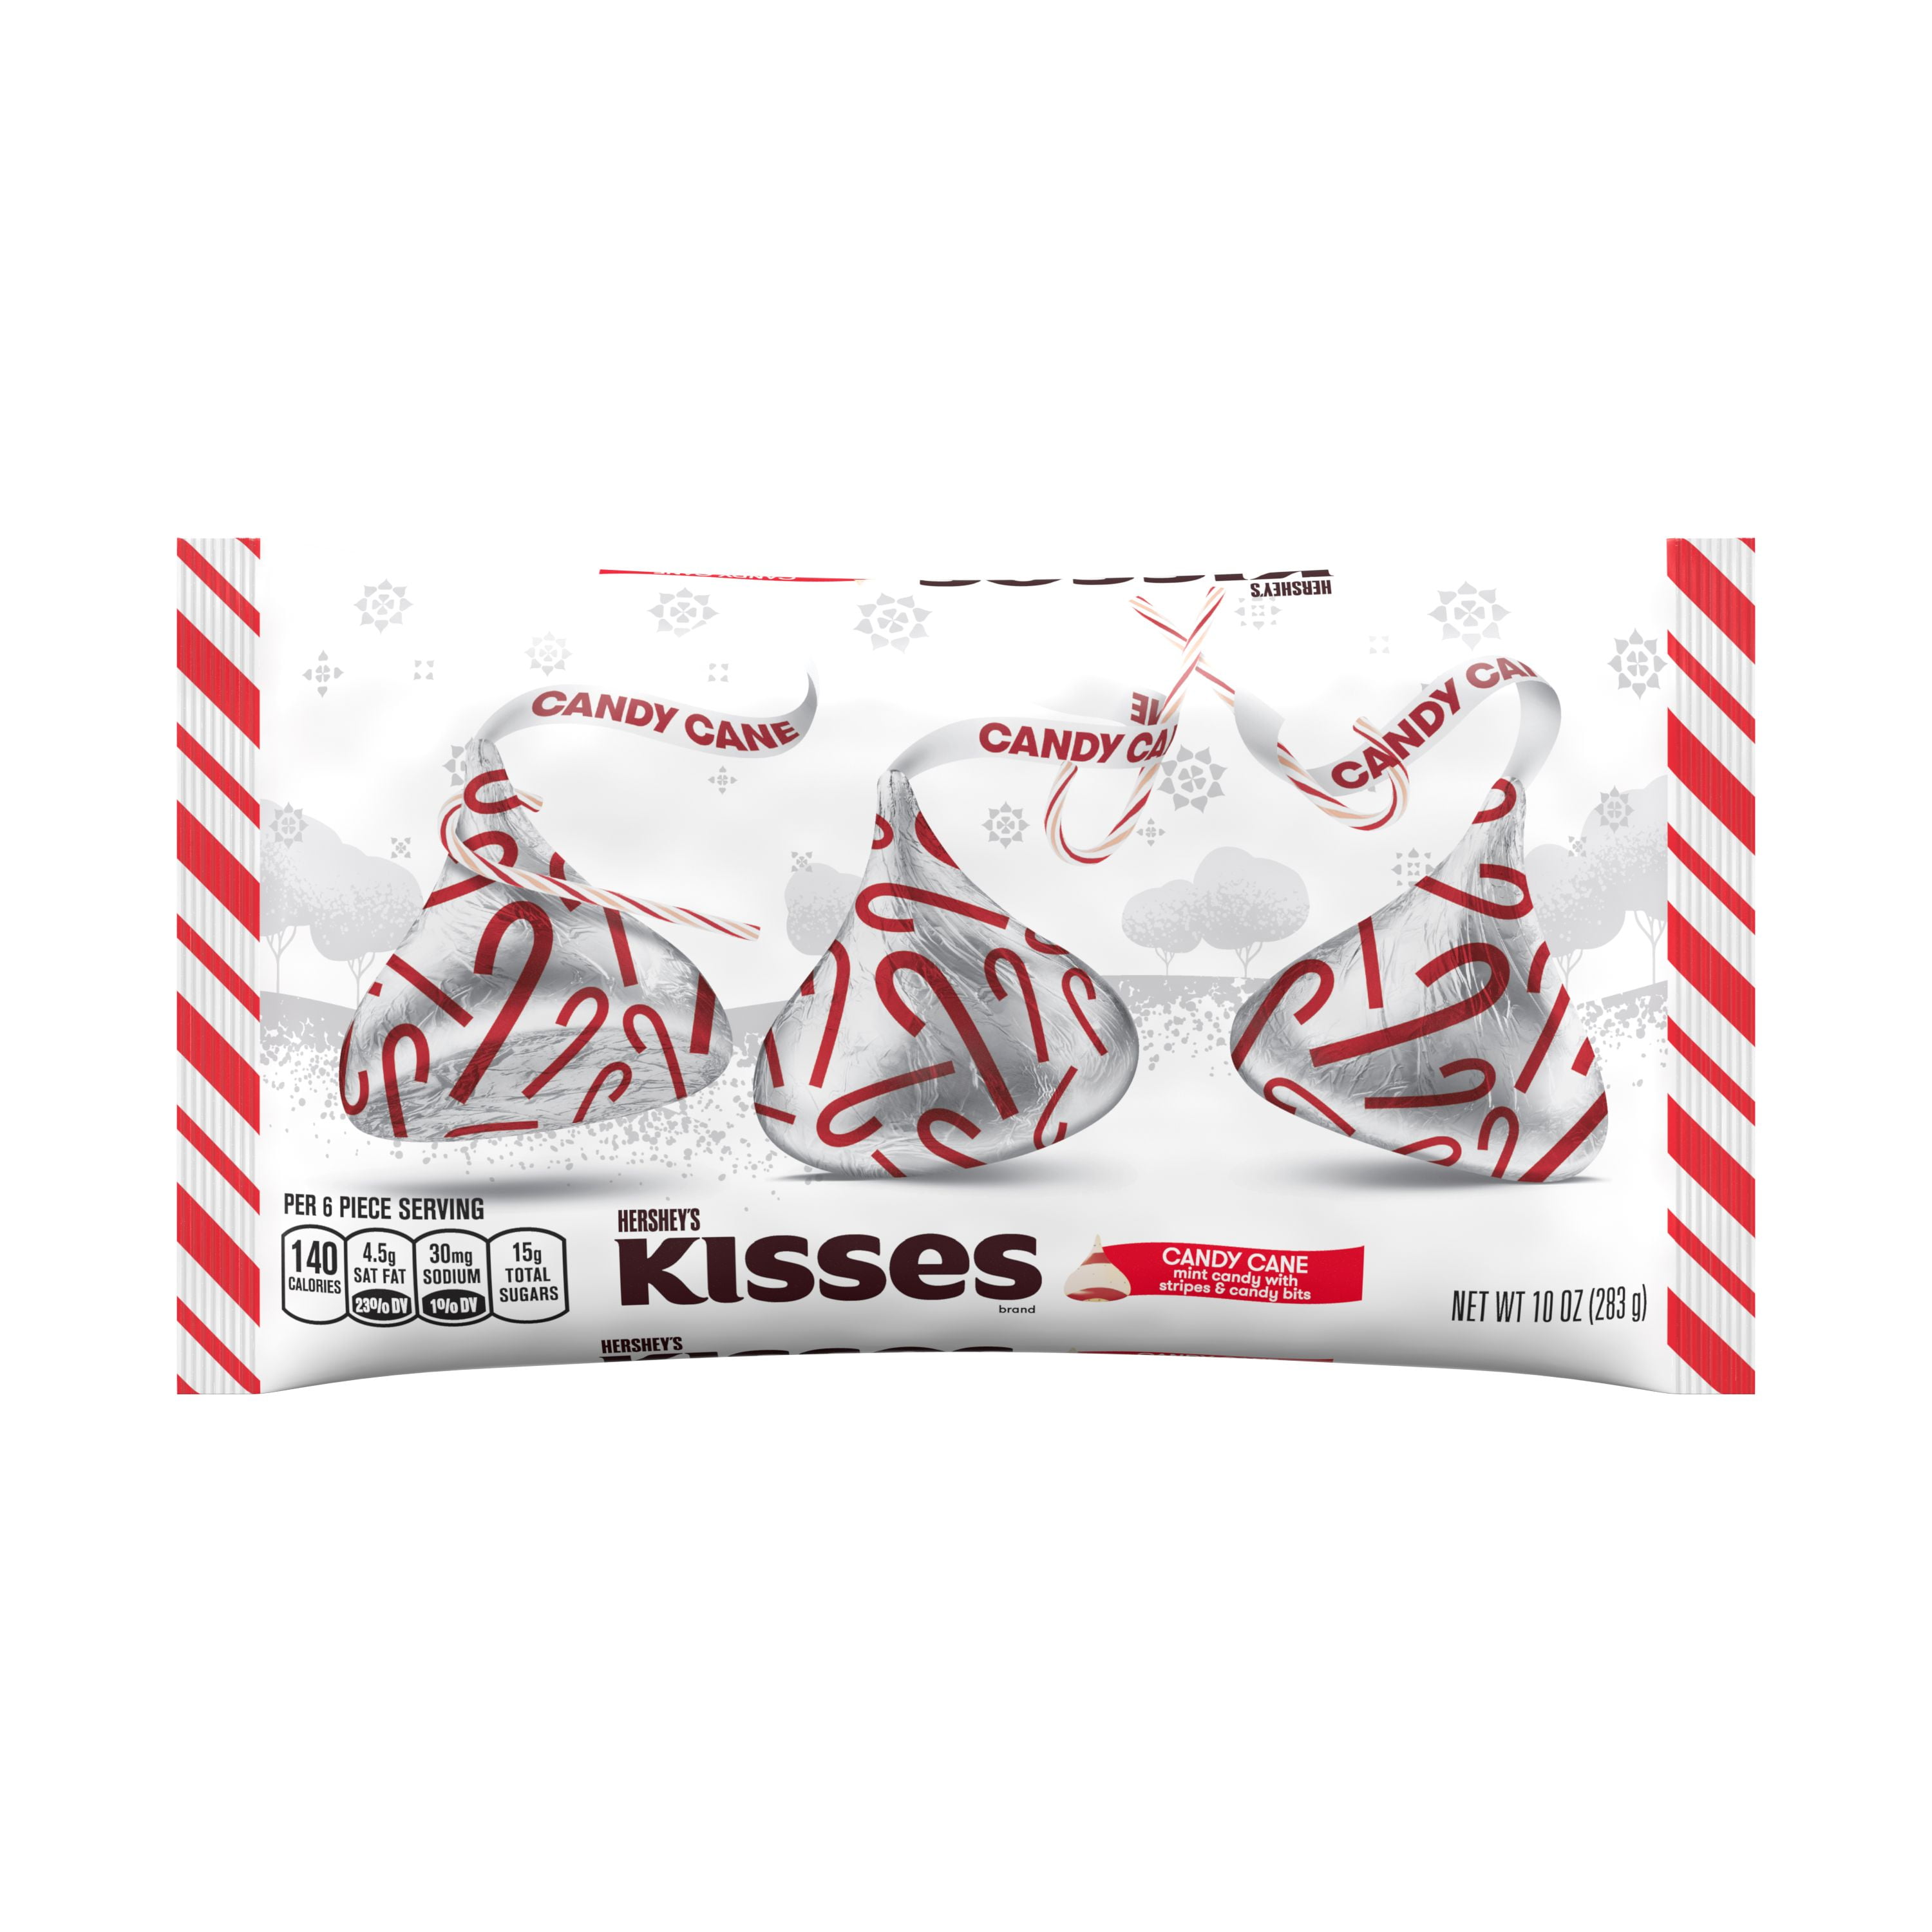 2 HERSHEY'S CANDY CANE KISSES White Chocolate 10oz BB10/2019 Seasonal peppermint 